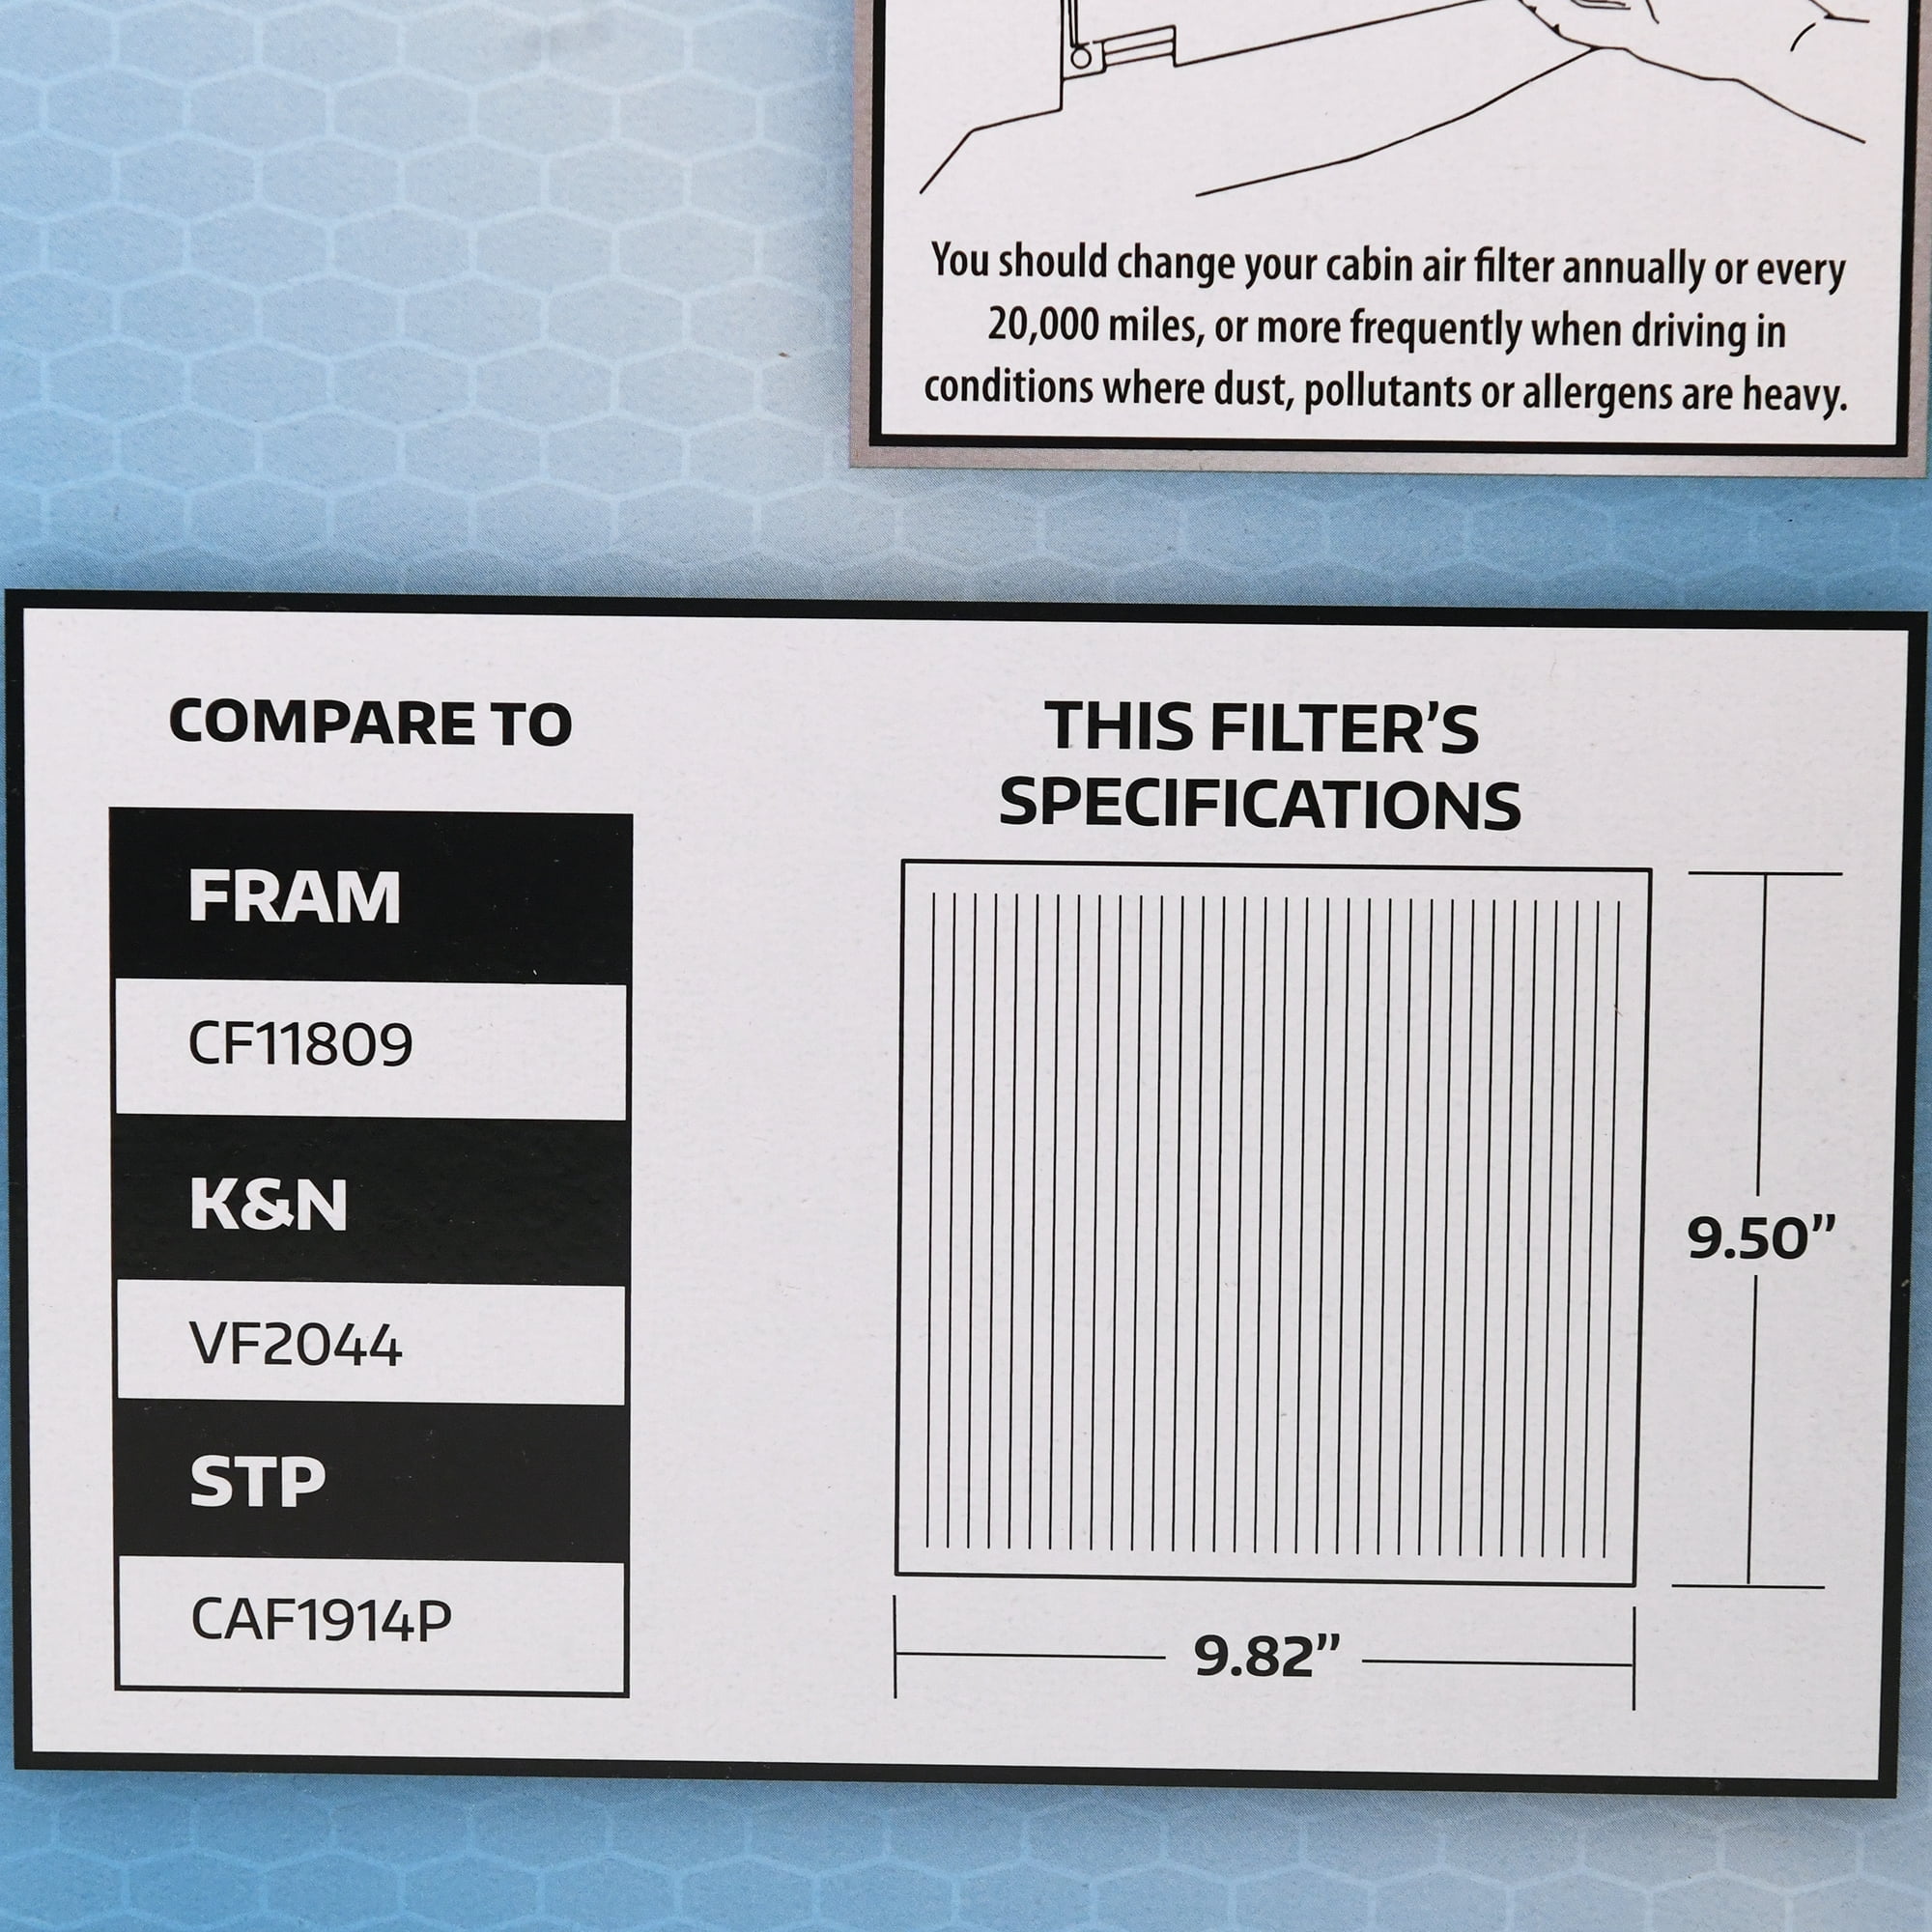 SuperTech Cabin Air Filter 5505, Replacement Air/Dust Filter for